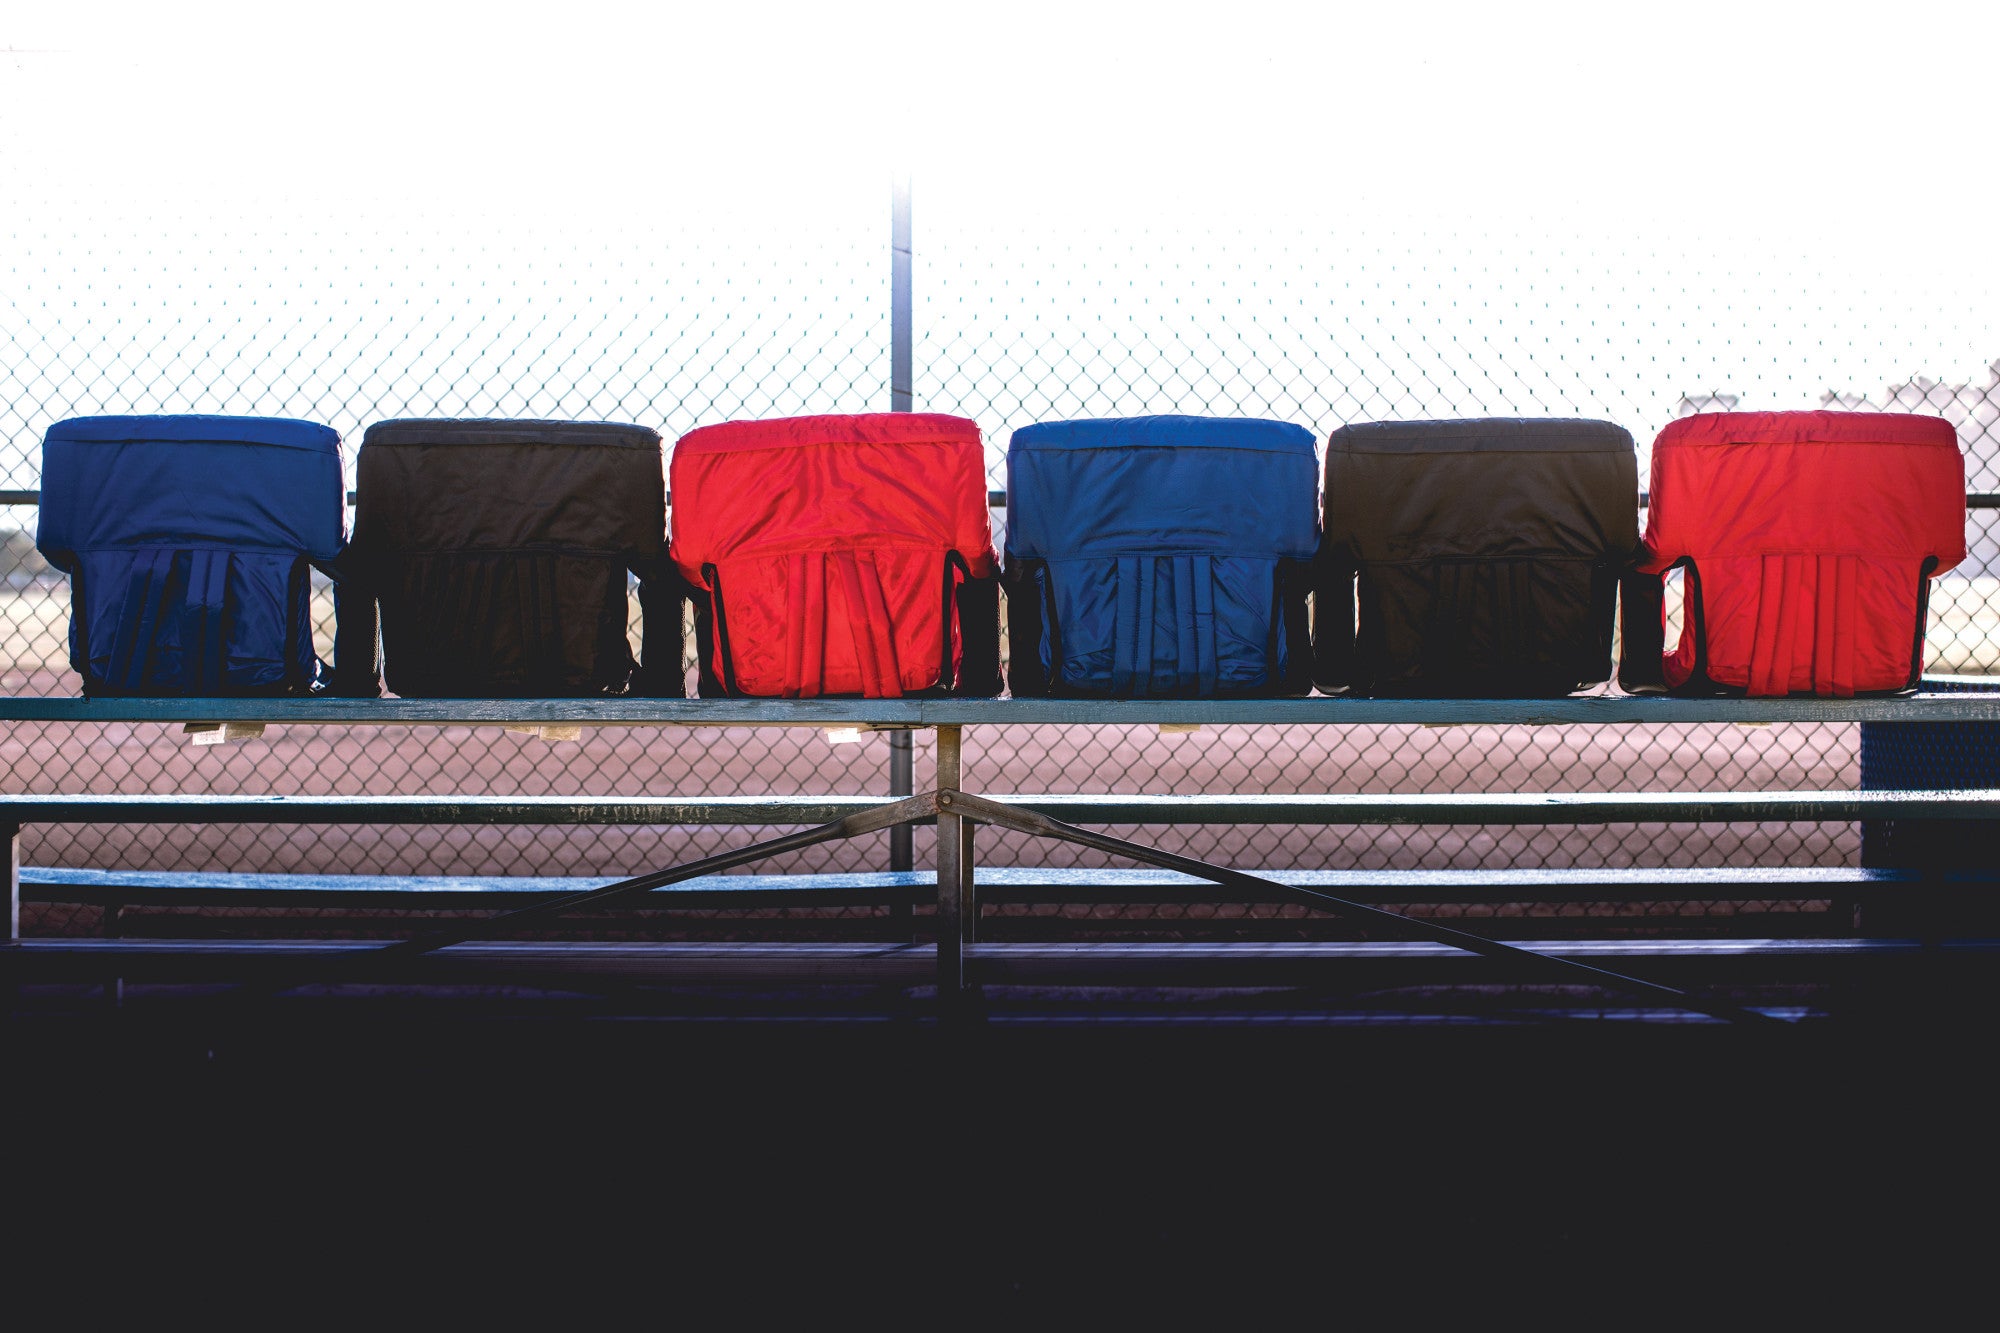 Texas Tech Red Raiders - Ventura Portable Reclining Stadium Seat